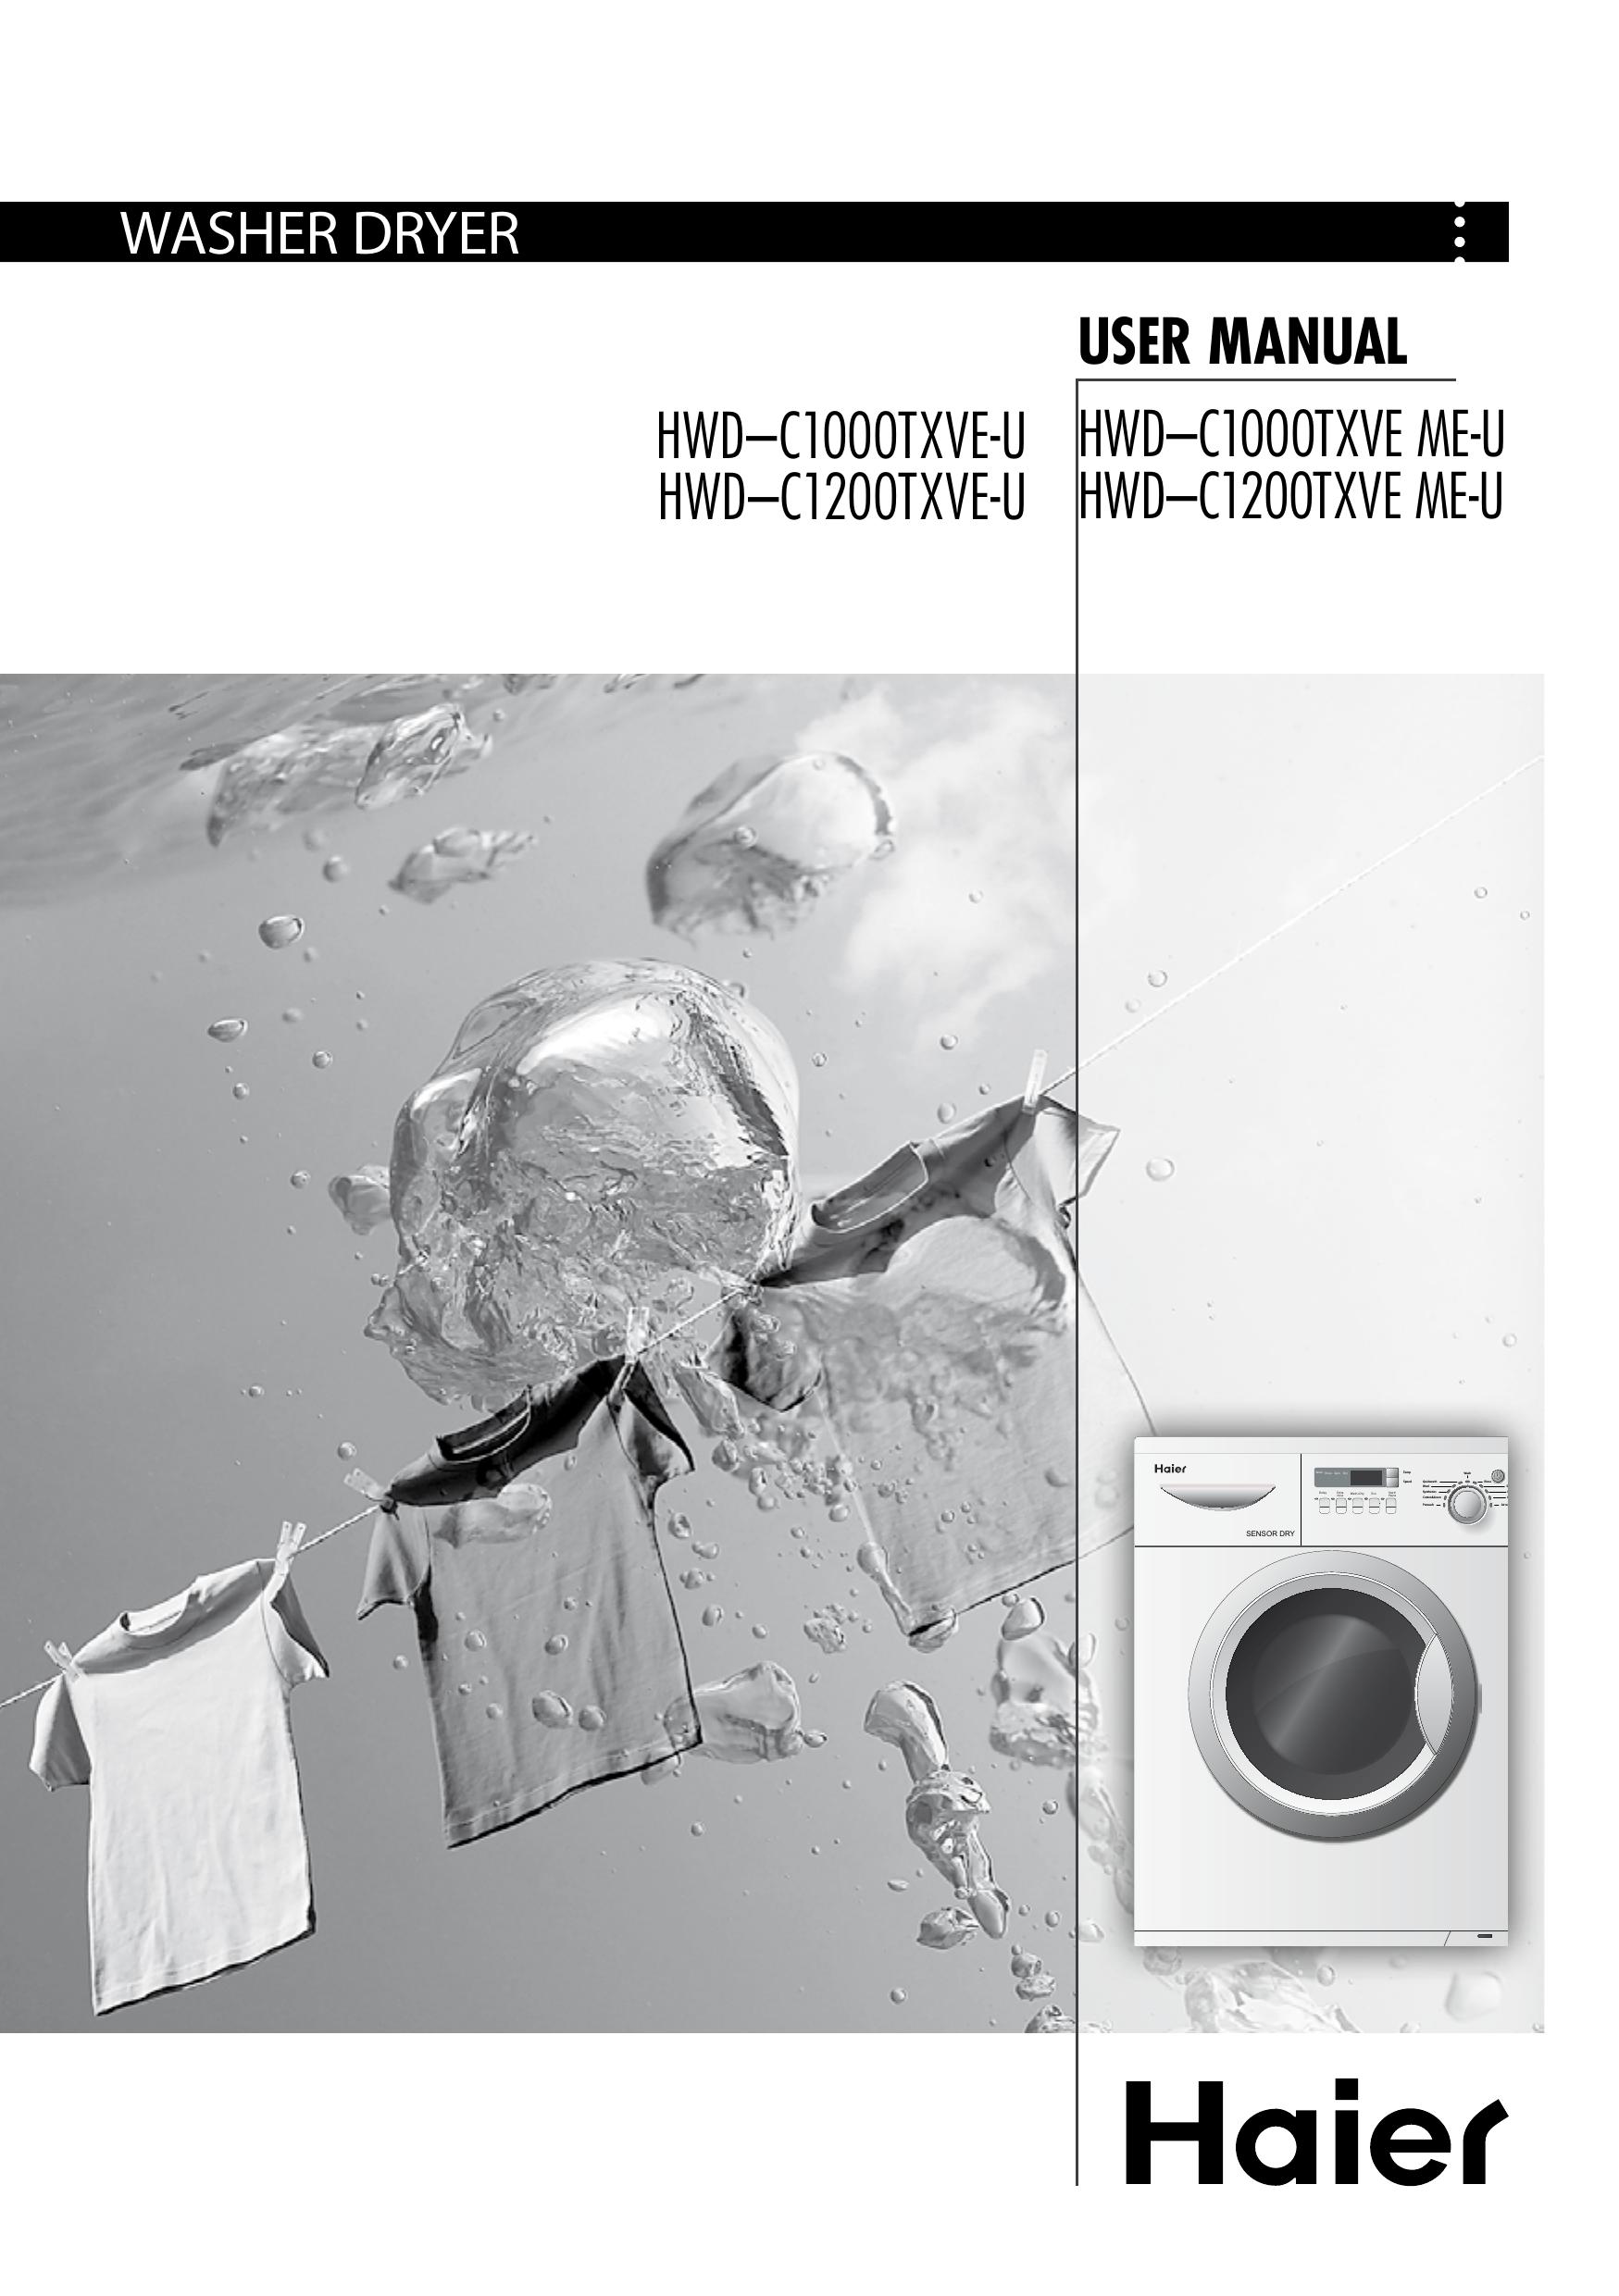 Haier HWDC1000TXVE ME-U Washer/Dryer User Manual